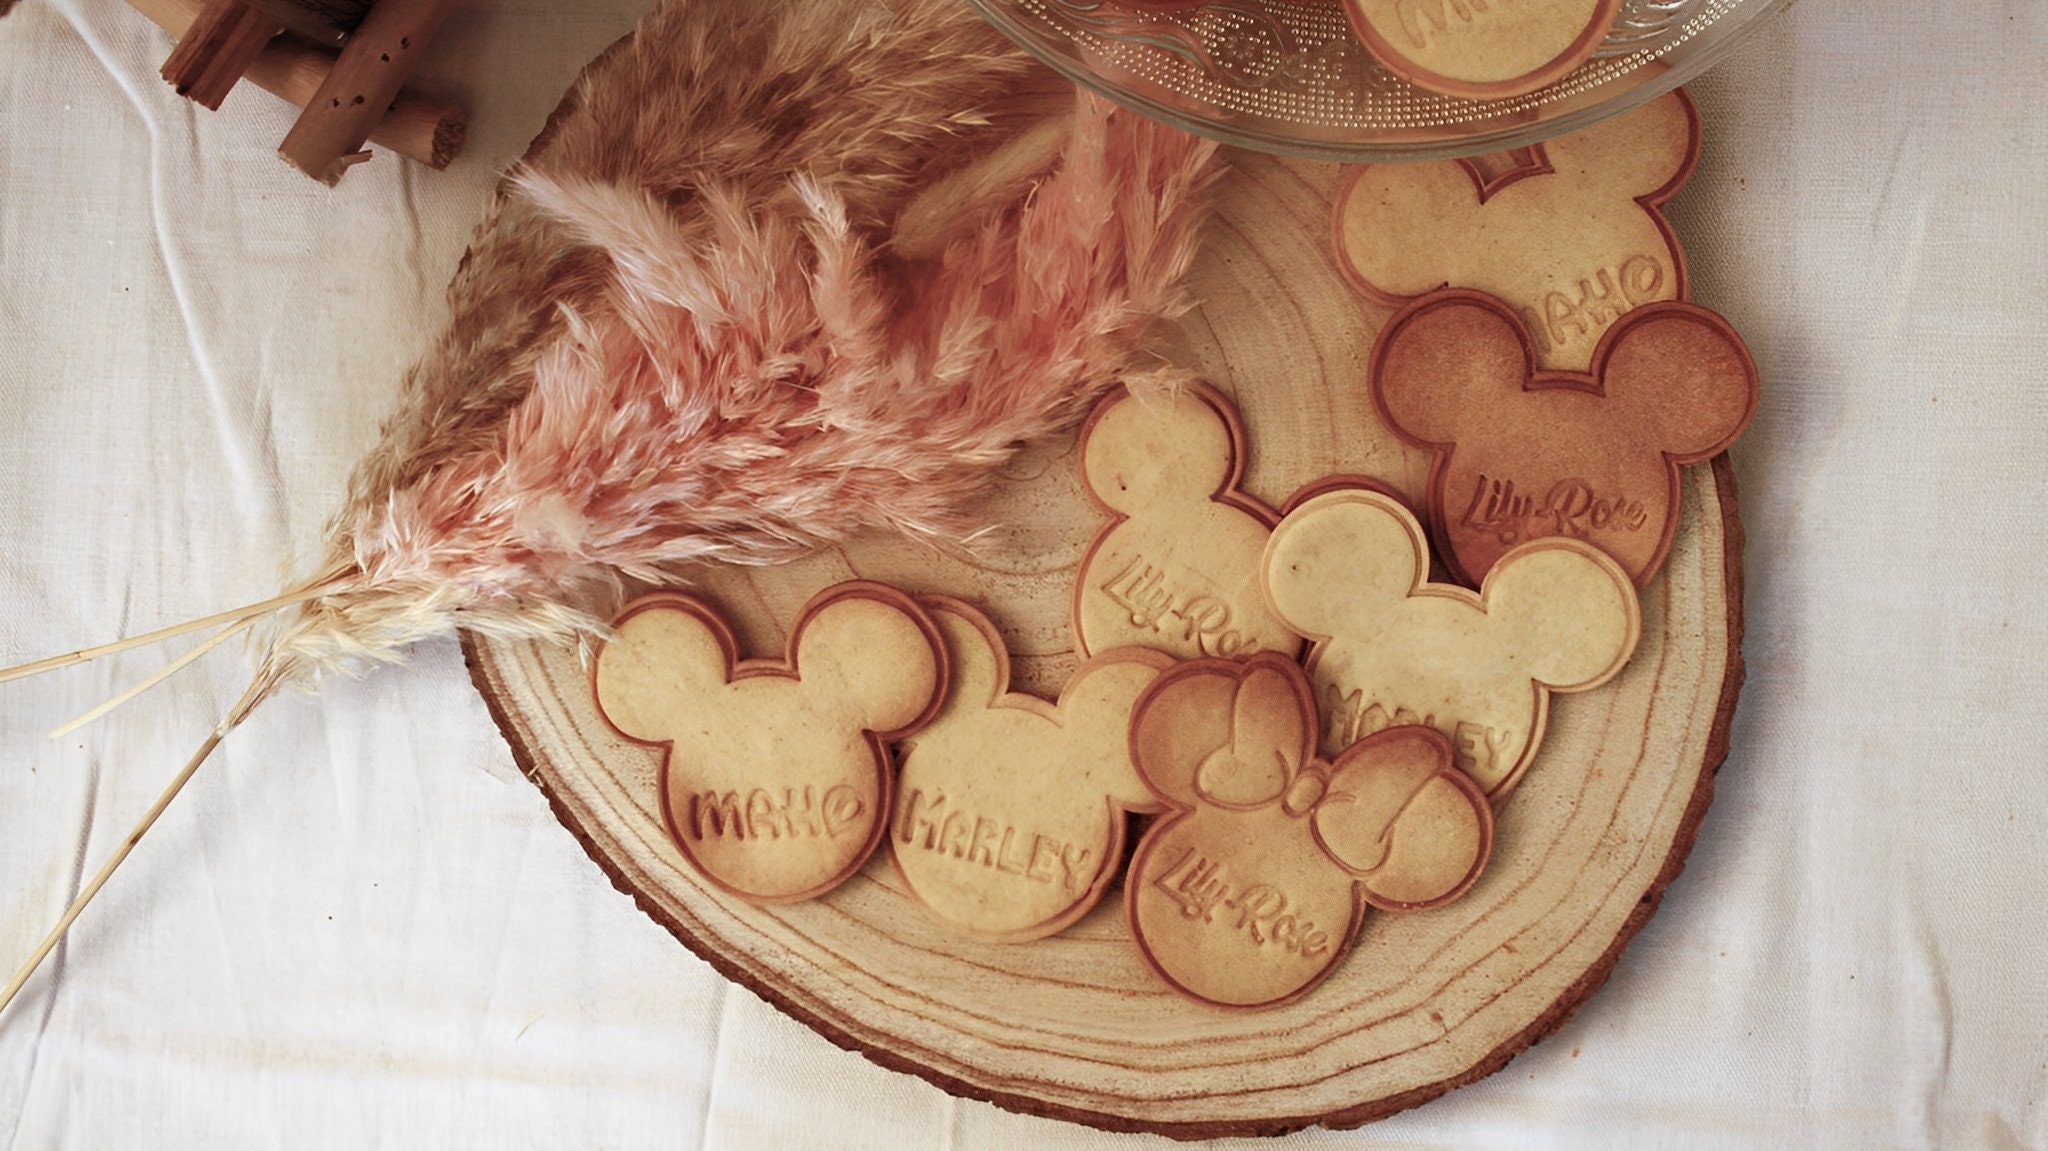 Emporte-pièce Minnie & Mickey personnalisé - Timbres à biscuits/Disney -  littlecookiie